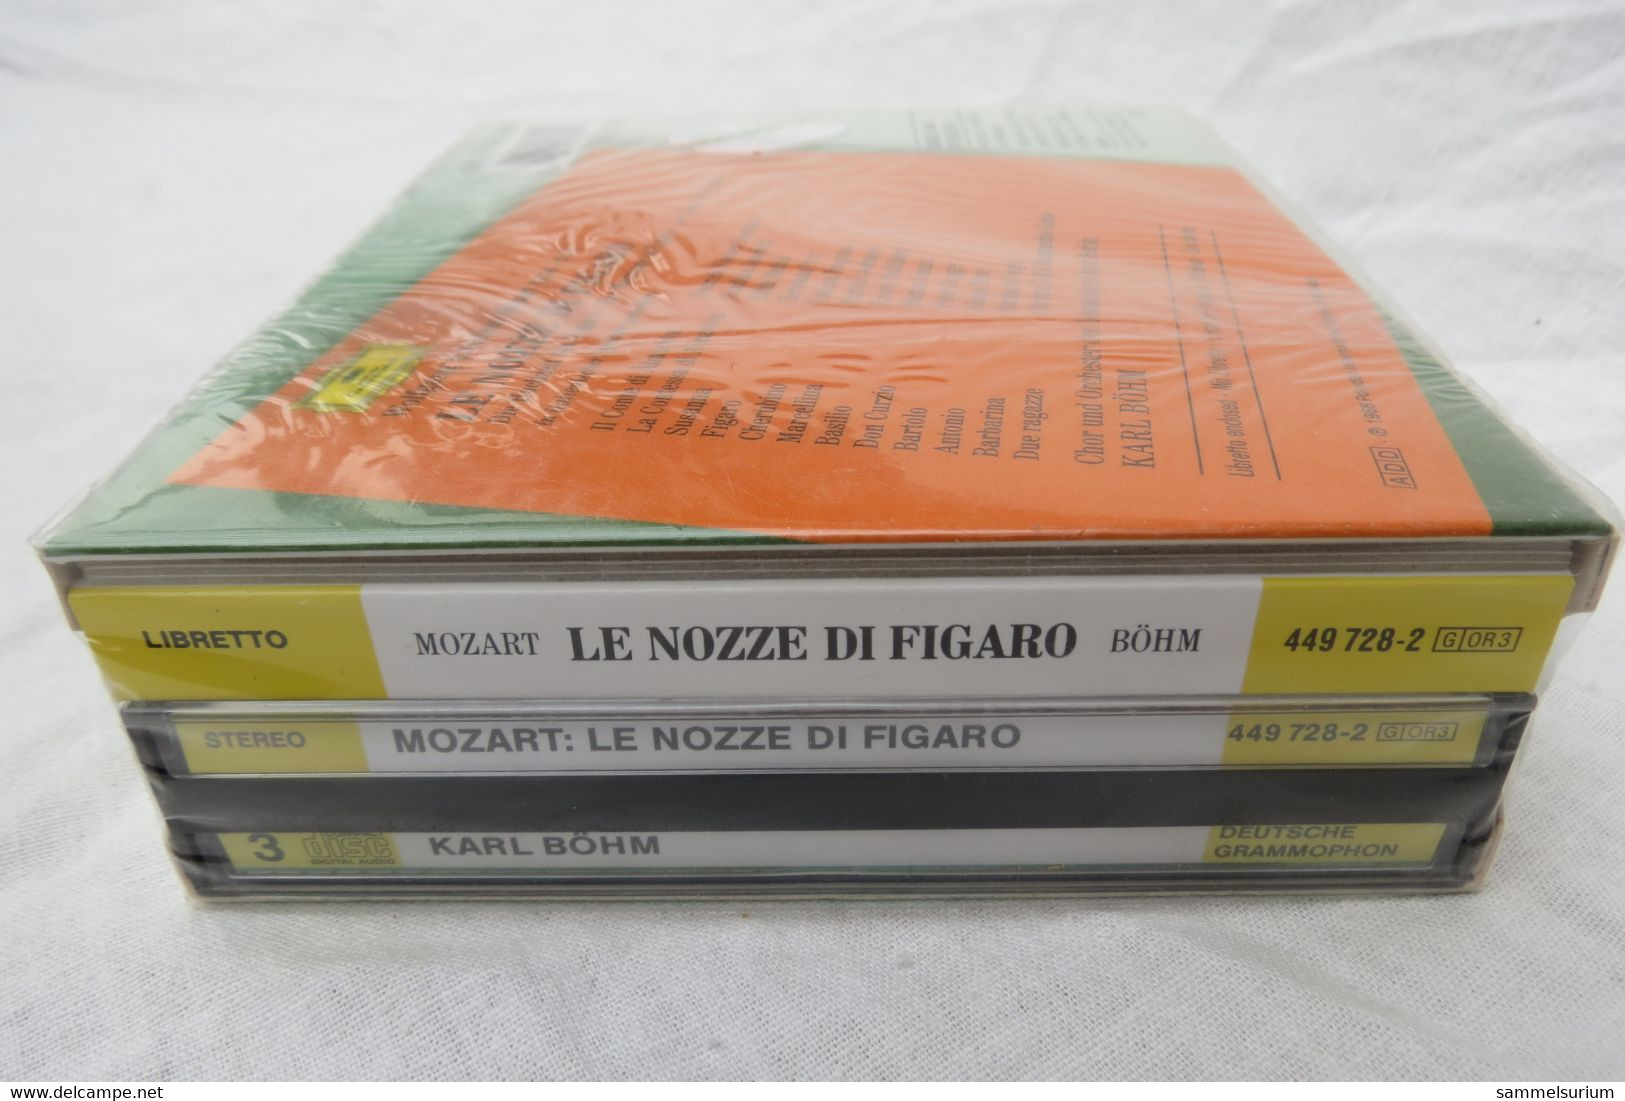 3 CDs "Wolfgang Amadeus Mozart" Le Nozze Di Figaro, Karl Böhm (noch Original Eingeschweißt) - Opera